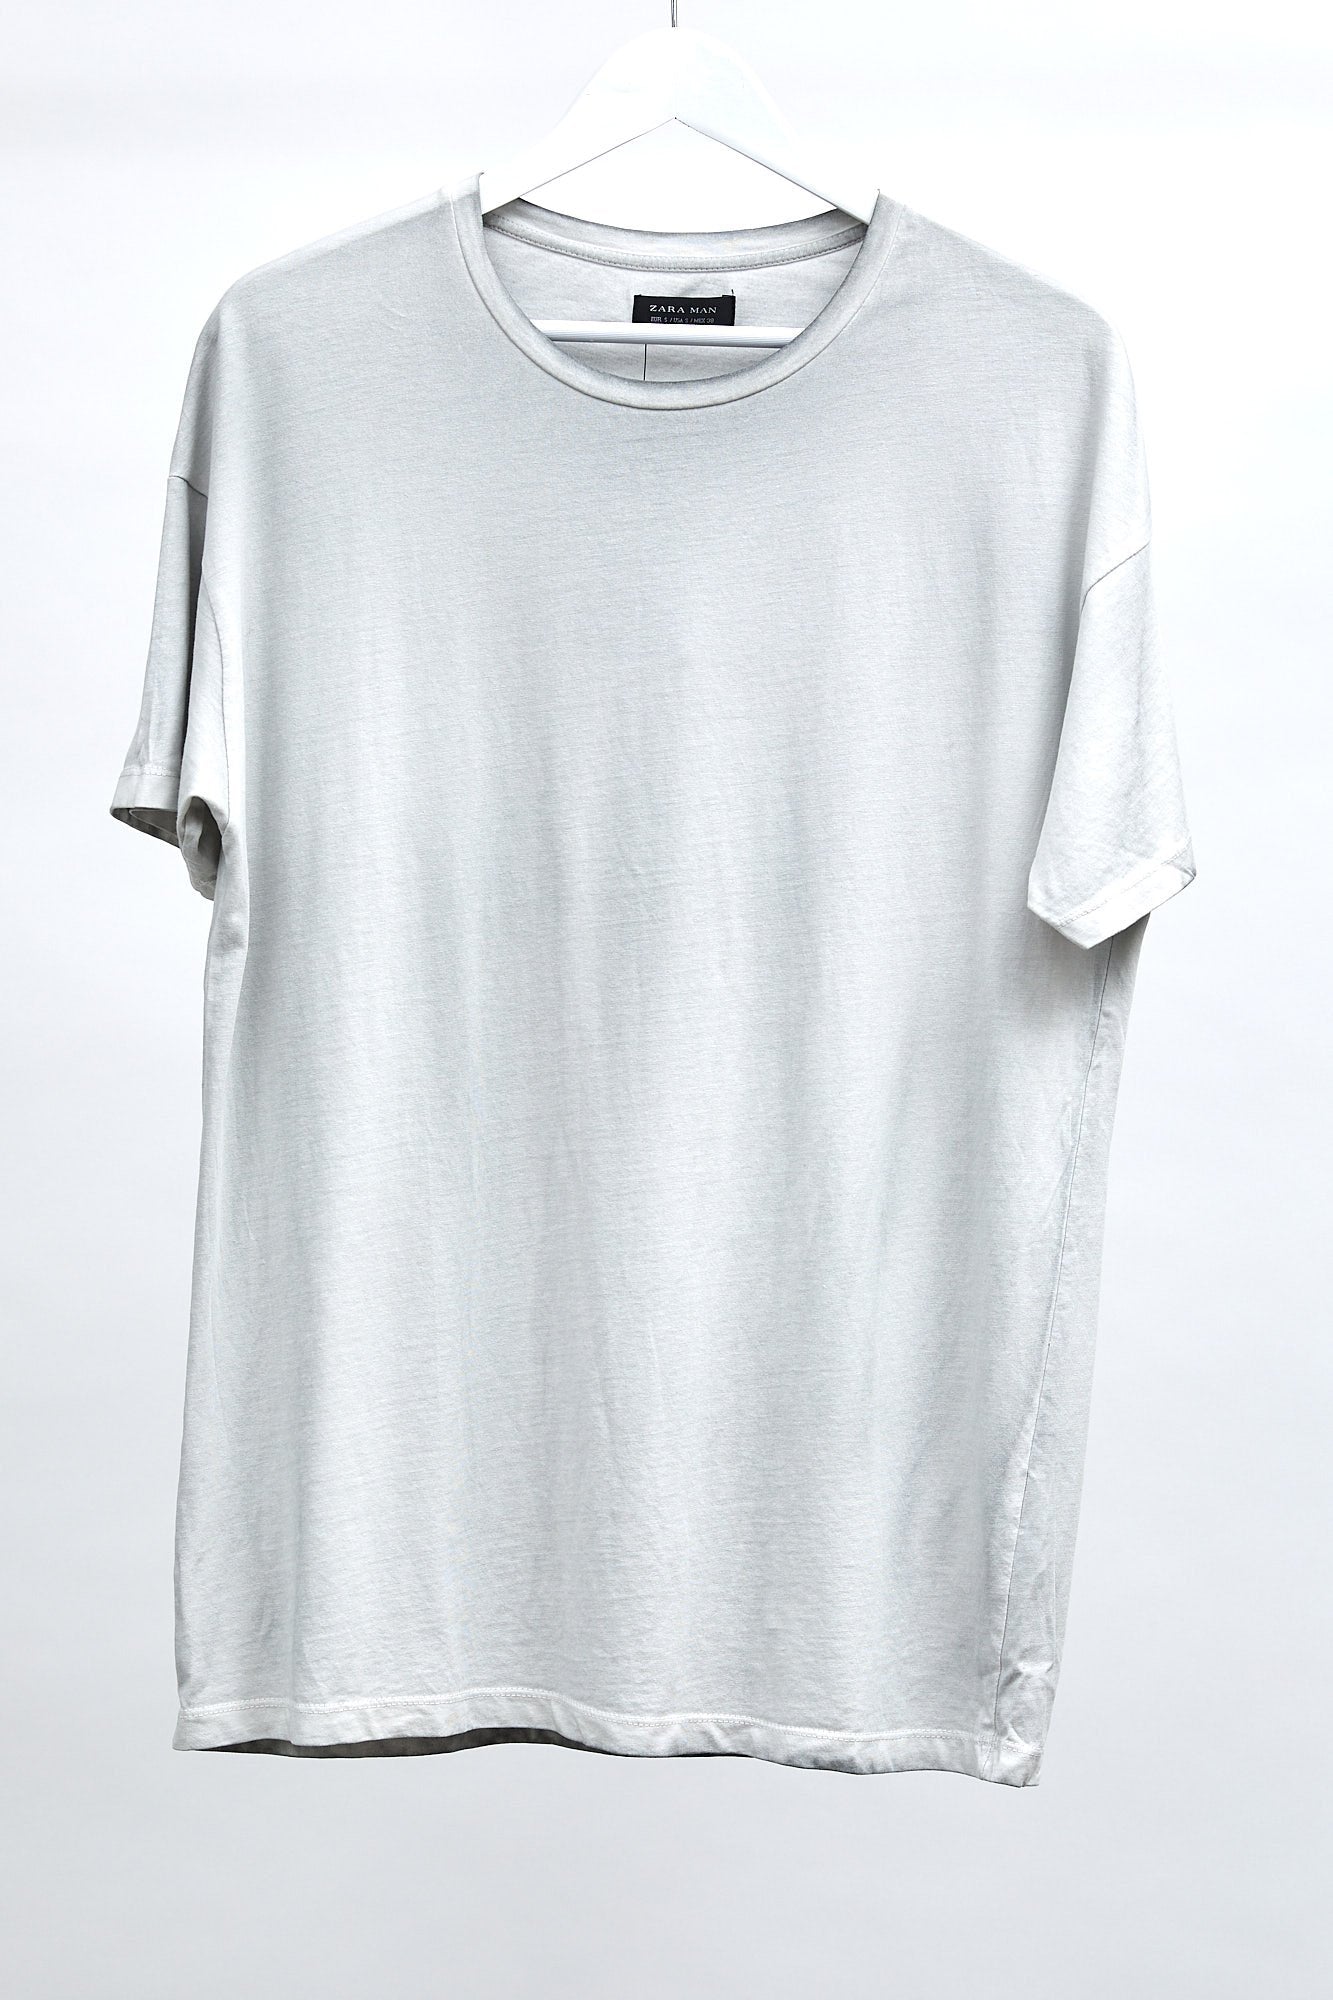 Mens Zara Grey T-Shirt: Size Medium